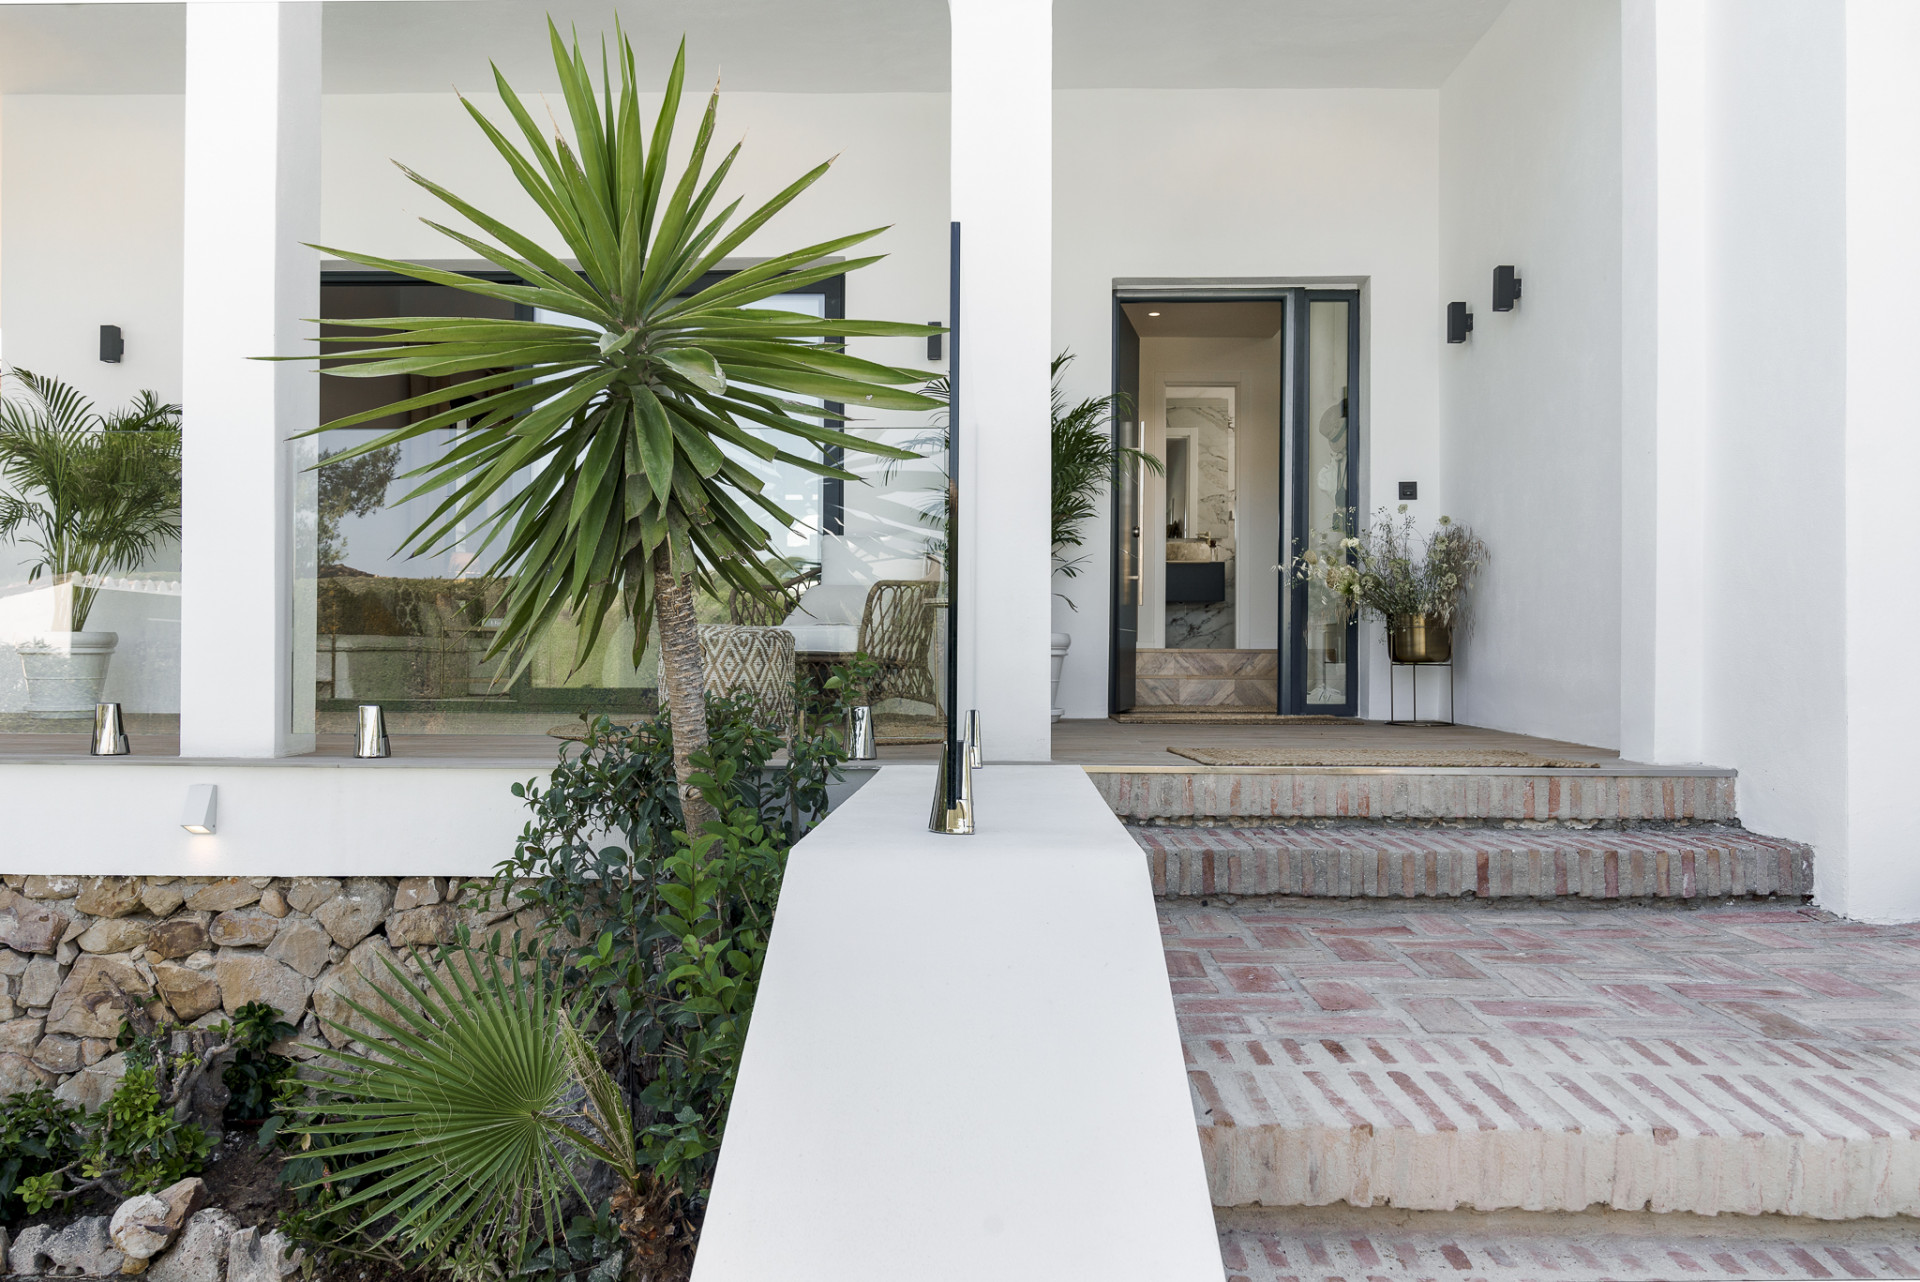 Villa Hibisco, contemporary villa situated in a private and secure community in Nueva Andalucia.